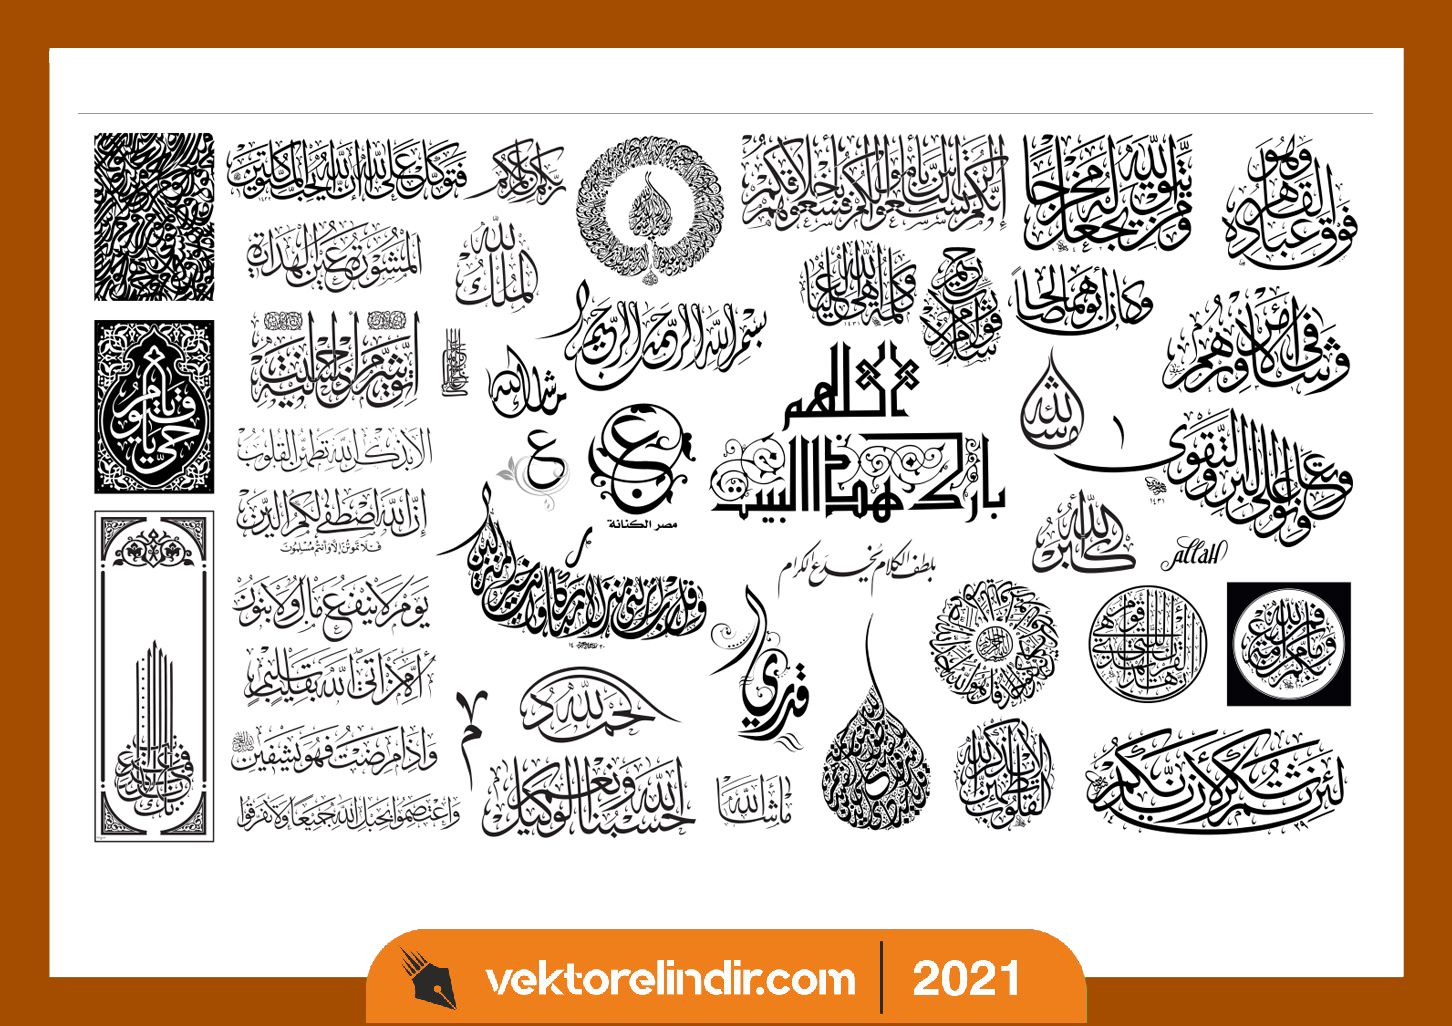 arapca-vektorel-besmele-allah-islami-1